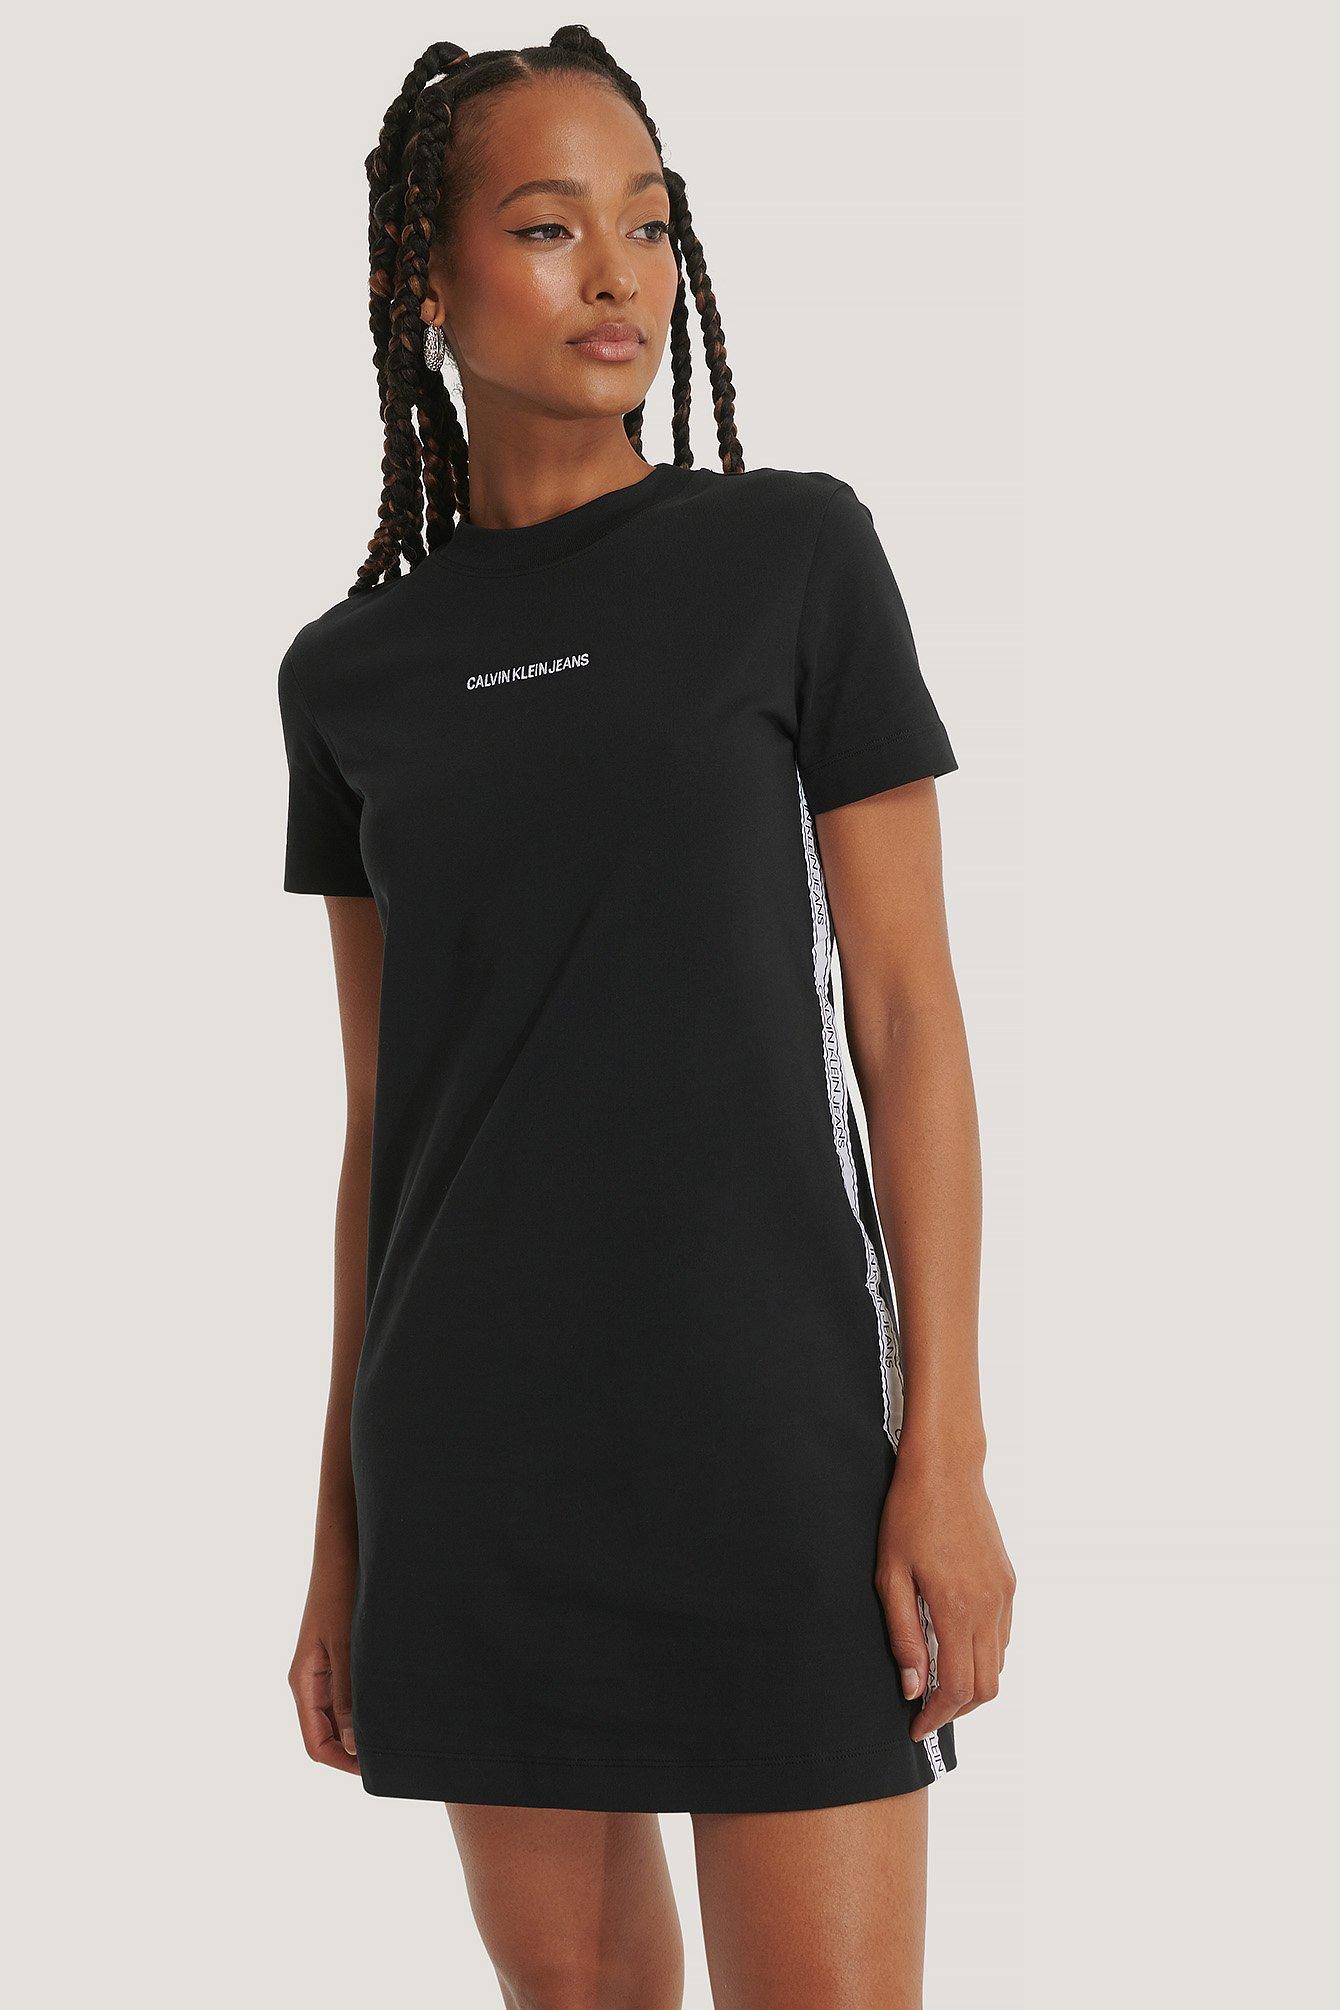 Calvin Klein Cotton Black Side Tape T-shirt Dress | Lyst